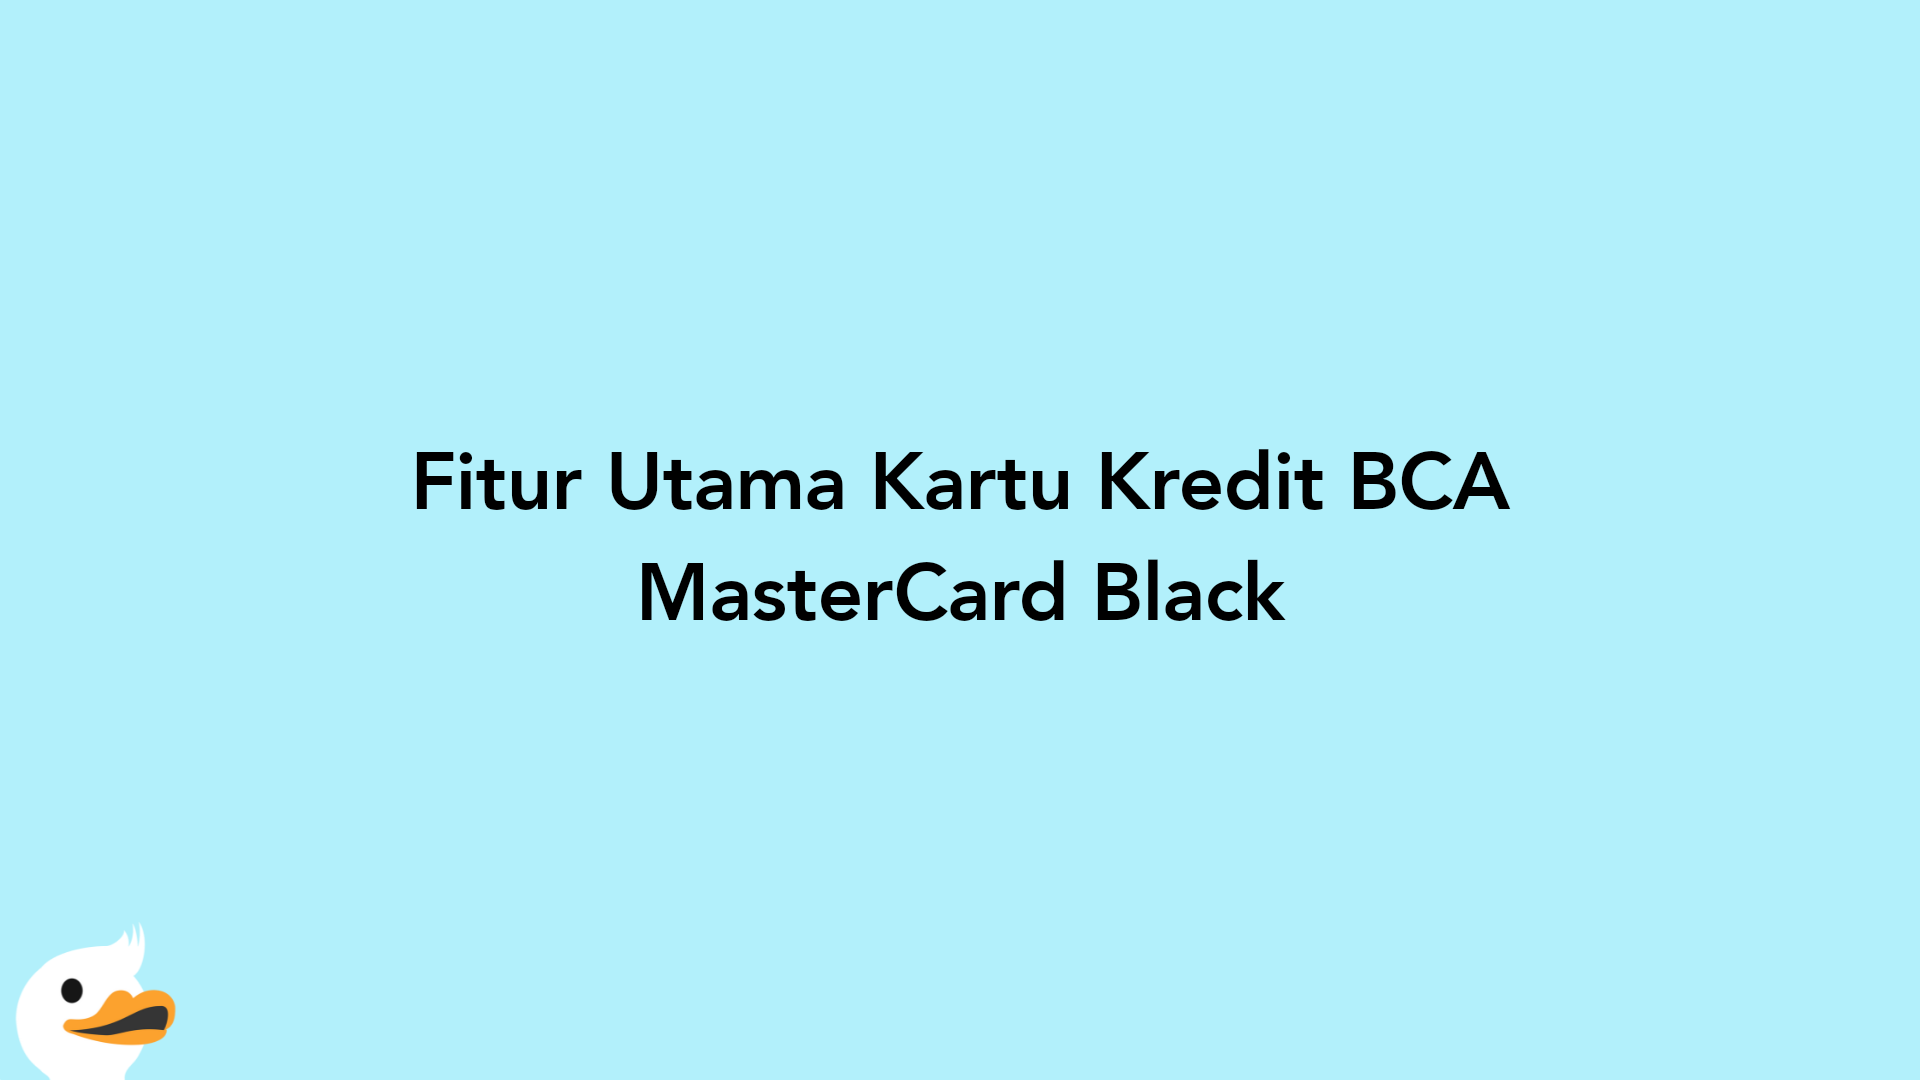 Fitur Utama Kartu Kredit BCA MasterCard Black